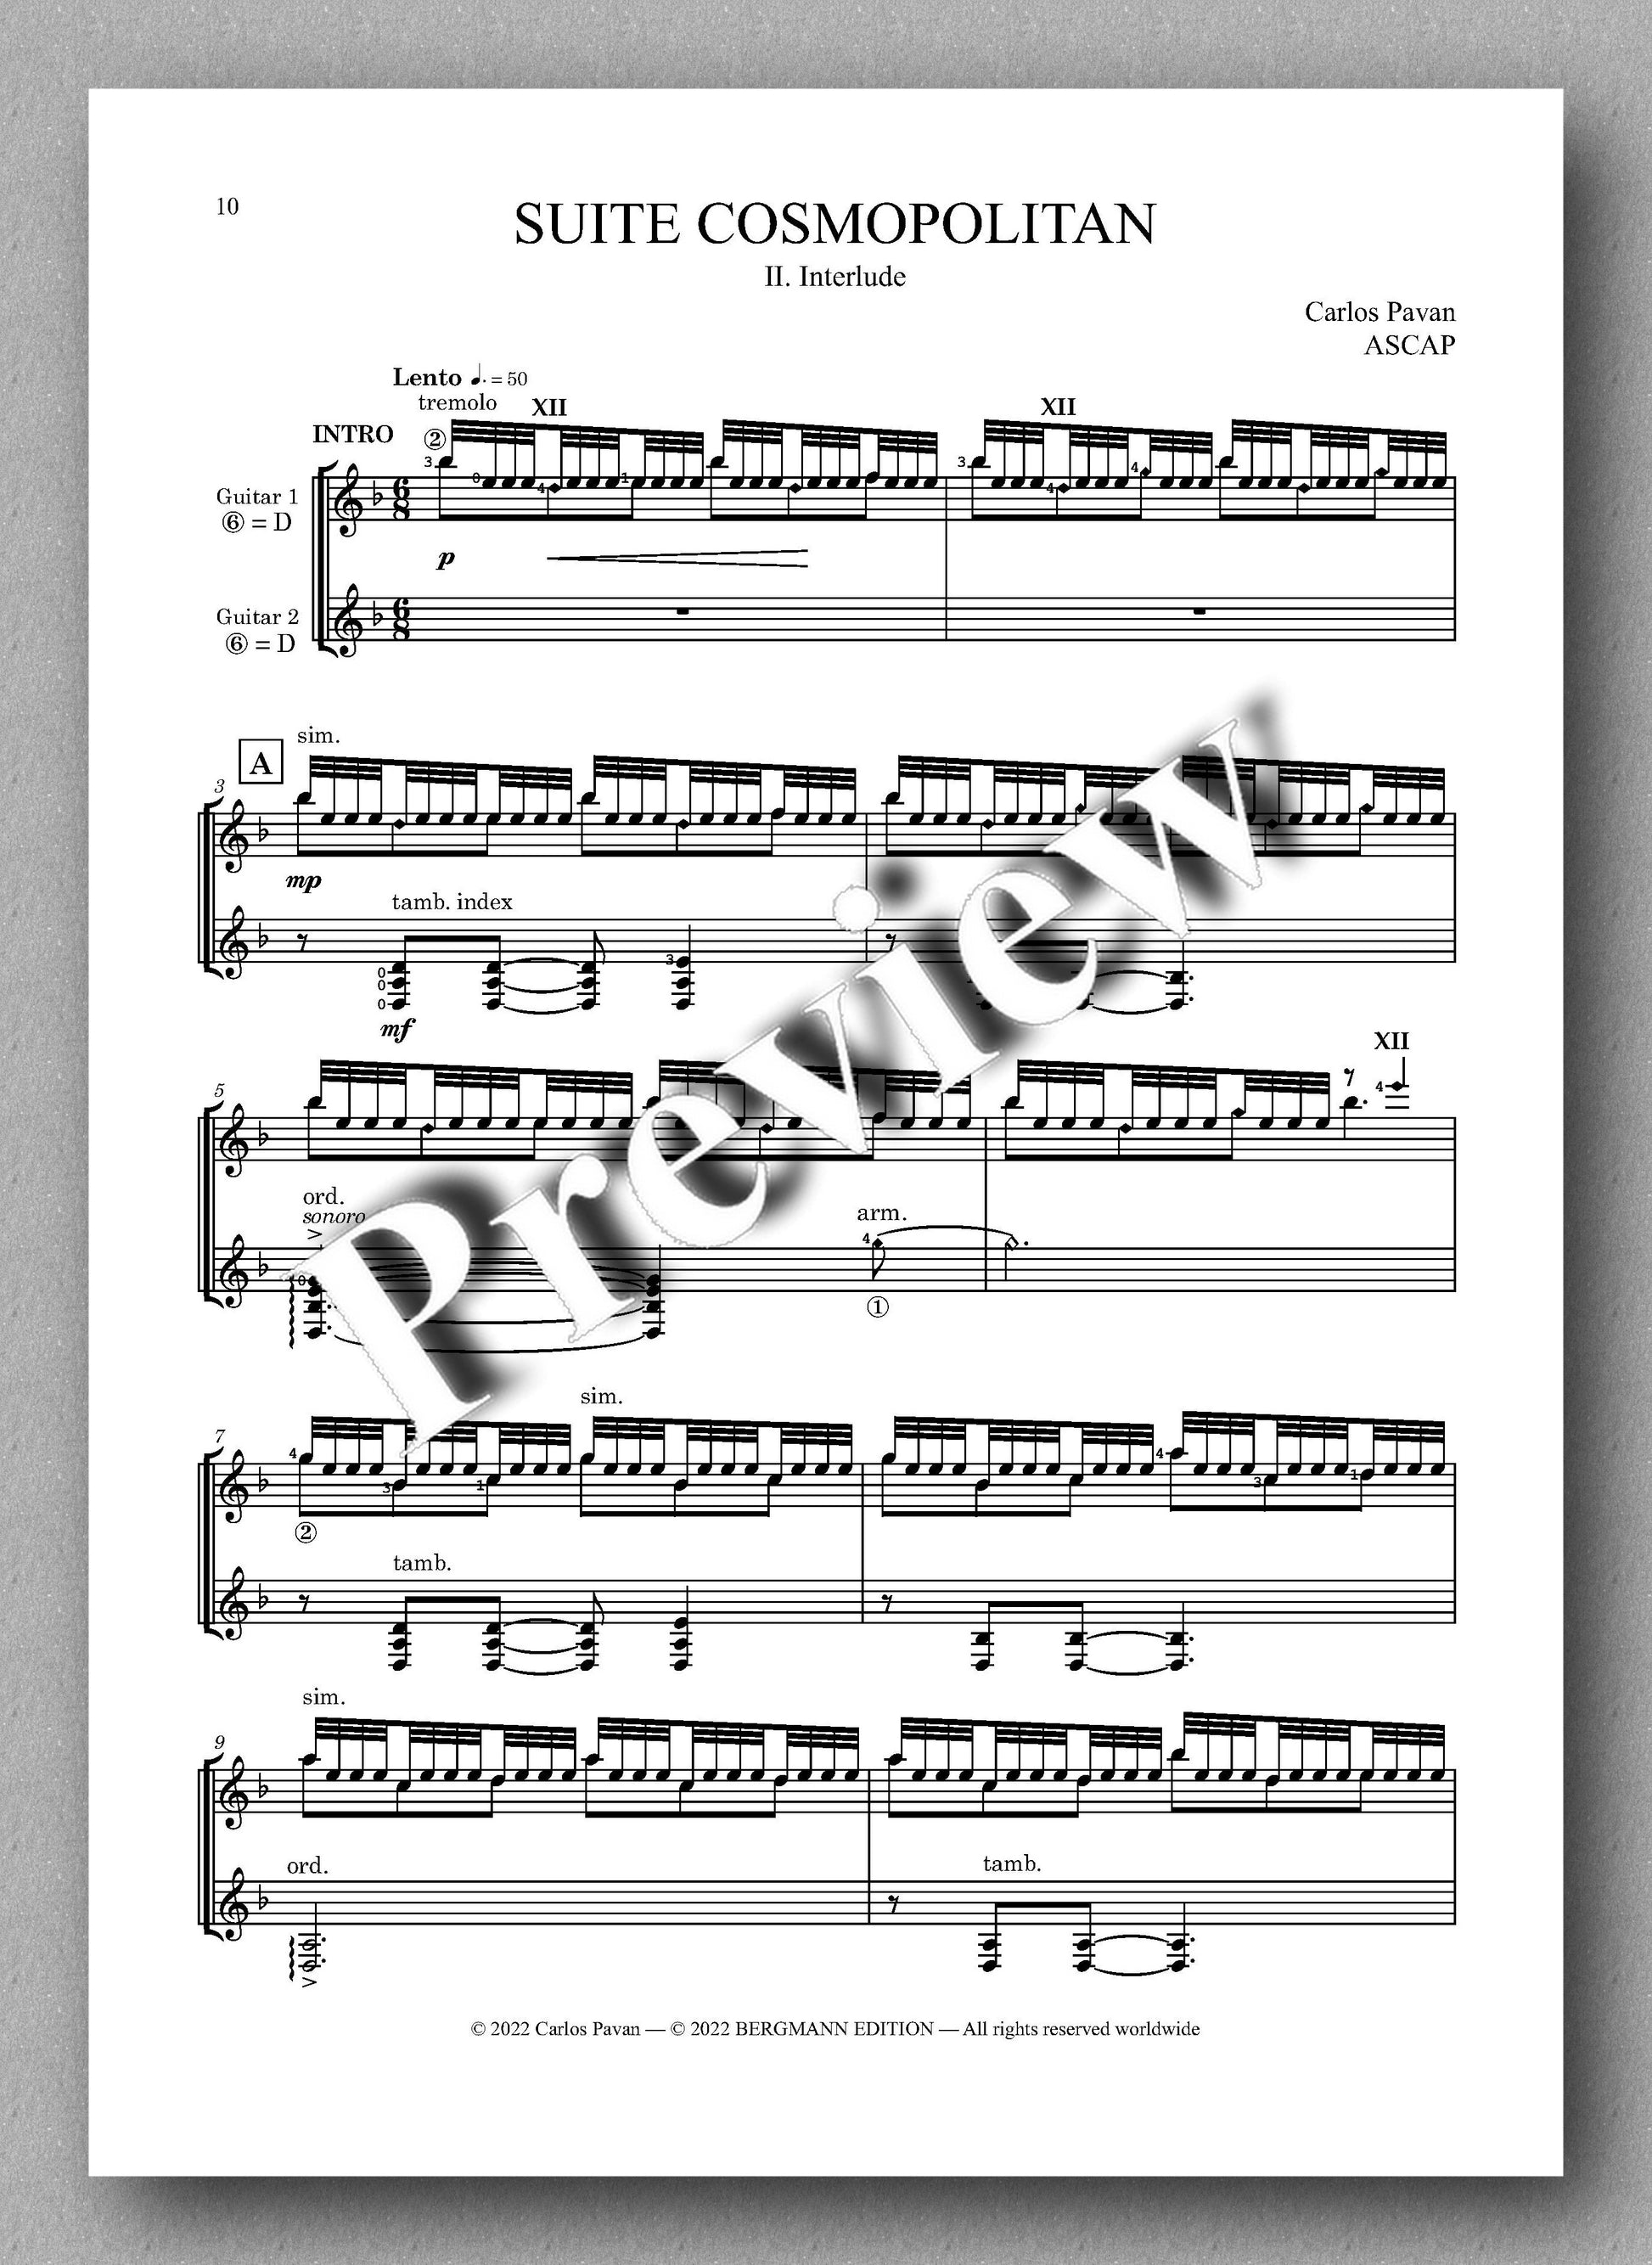 Carlos Pavan, Suite Cosmopolitan - music score 2